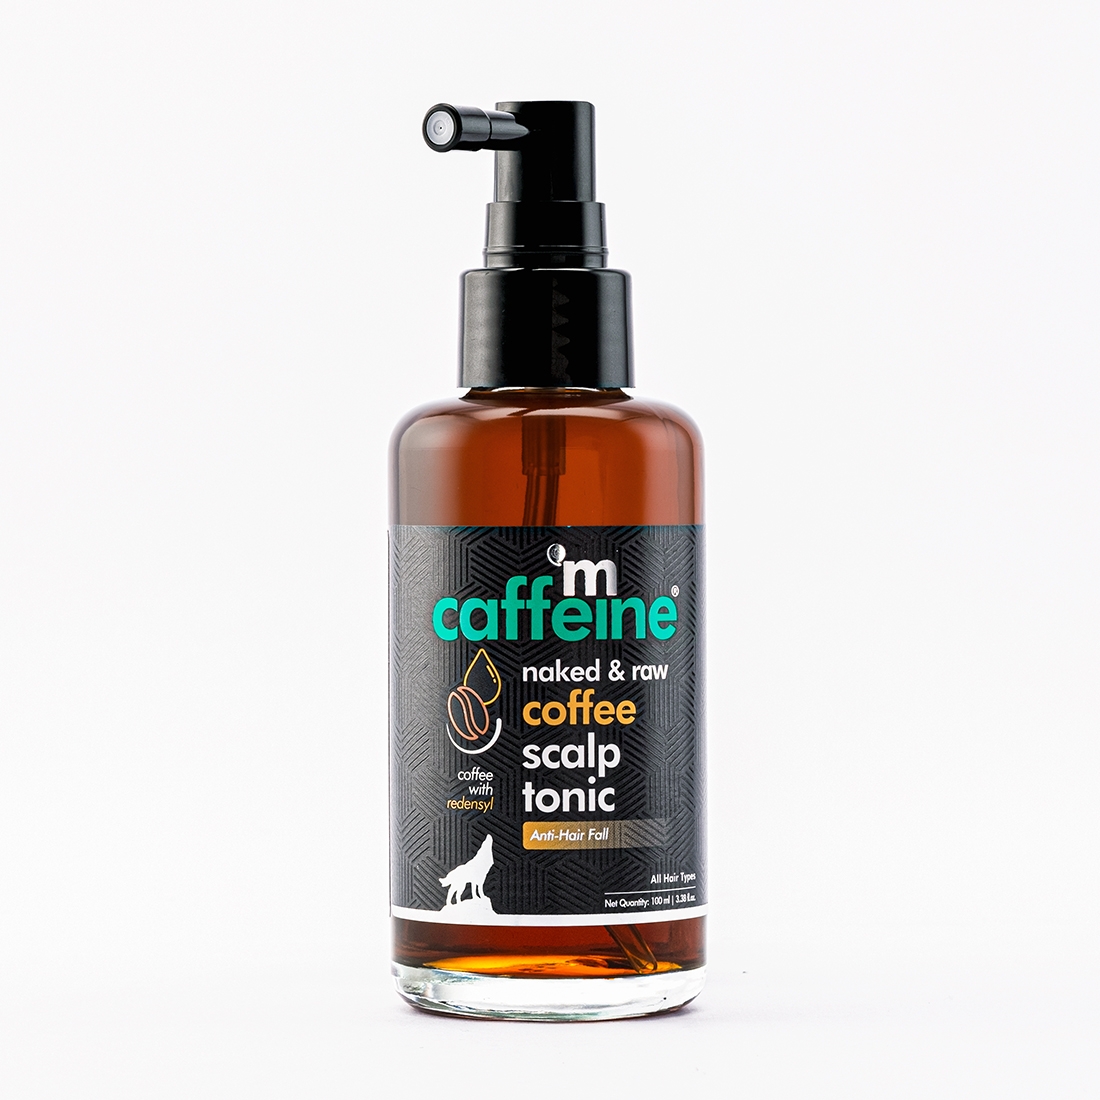 MCaffeine | mcaffeine Naked & Raw Coffee Scalp Tonic (100Ml)